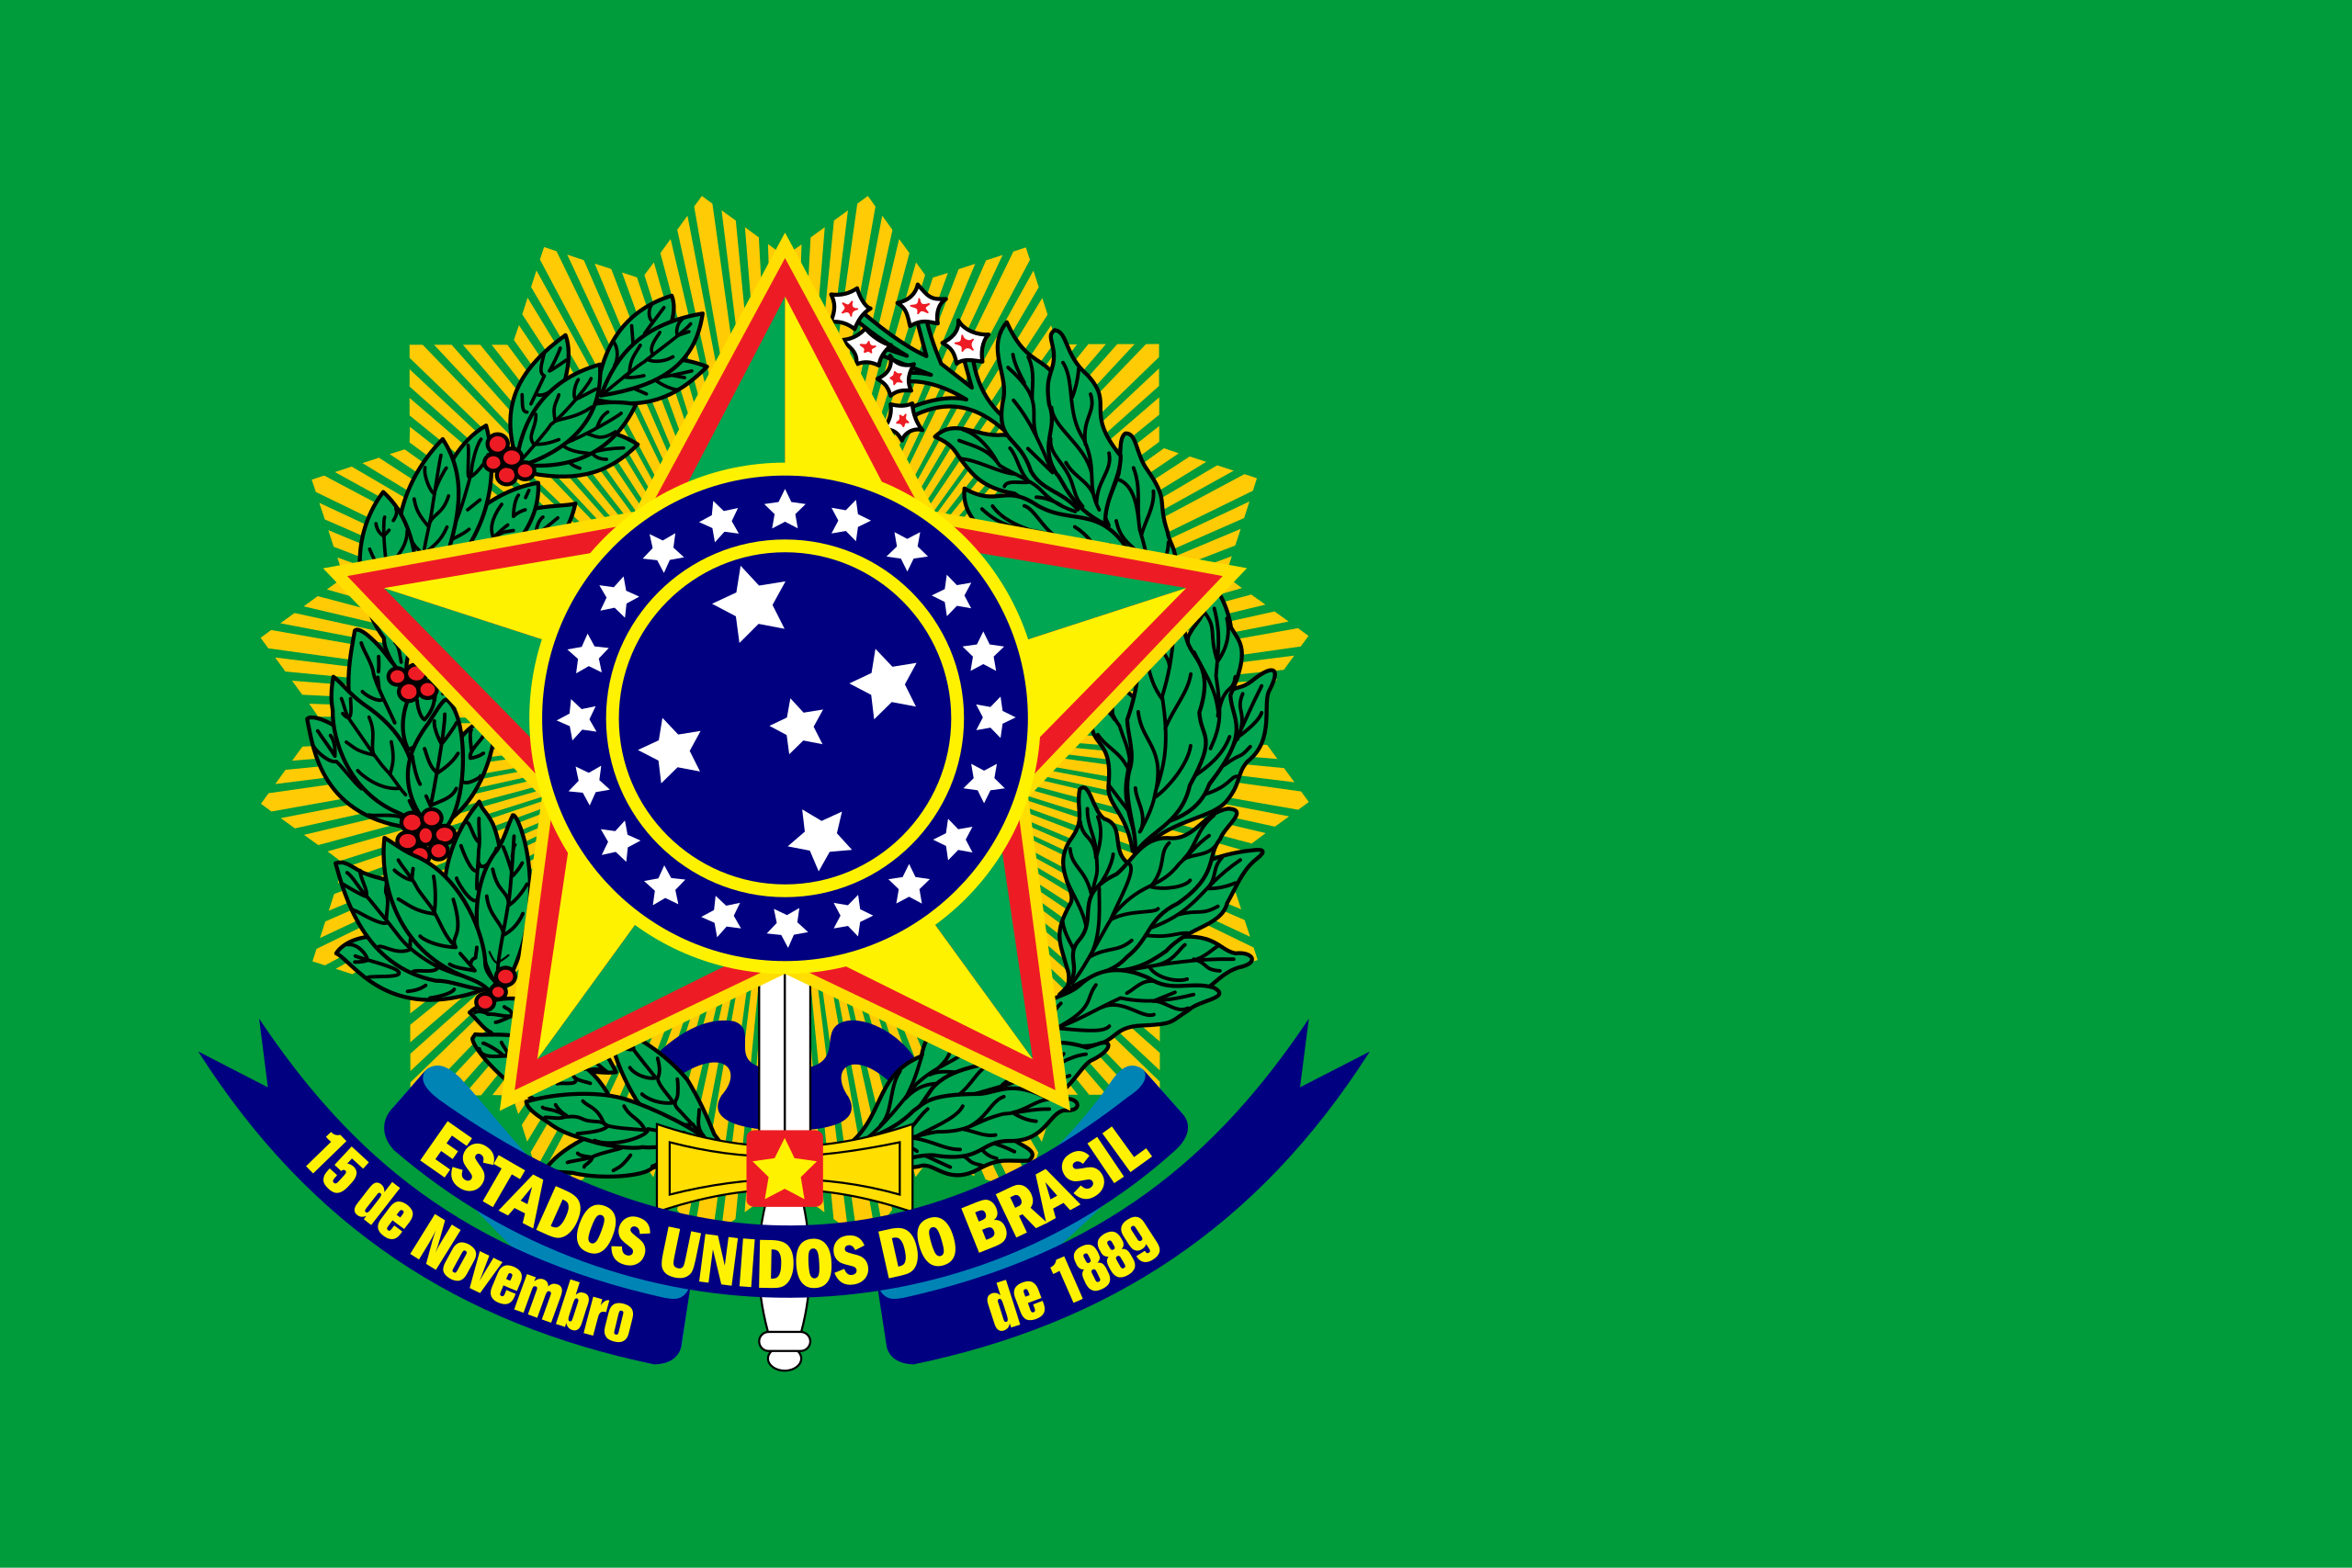 File:Republica do Brasil 1889.jpg - Wikimedia Commons